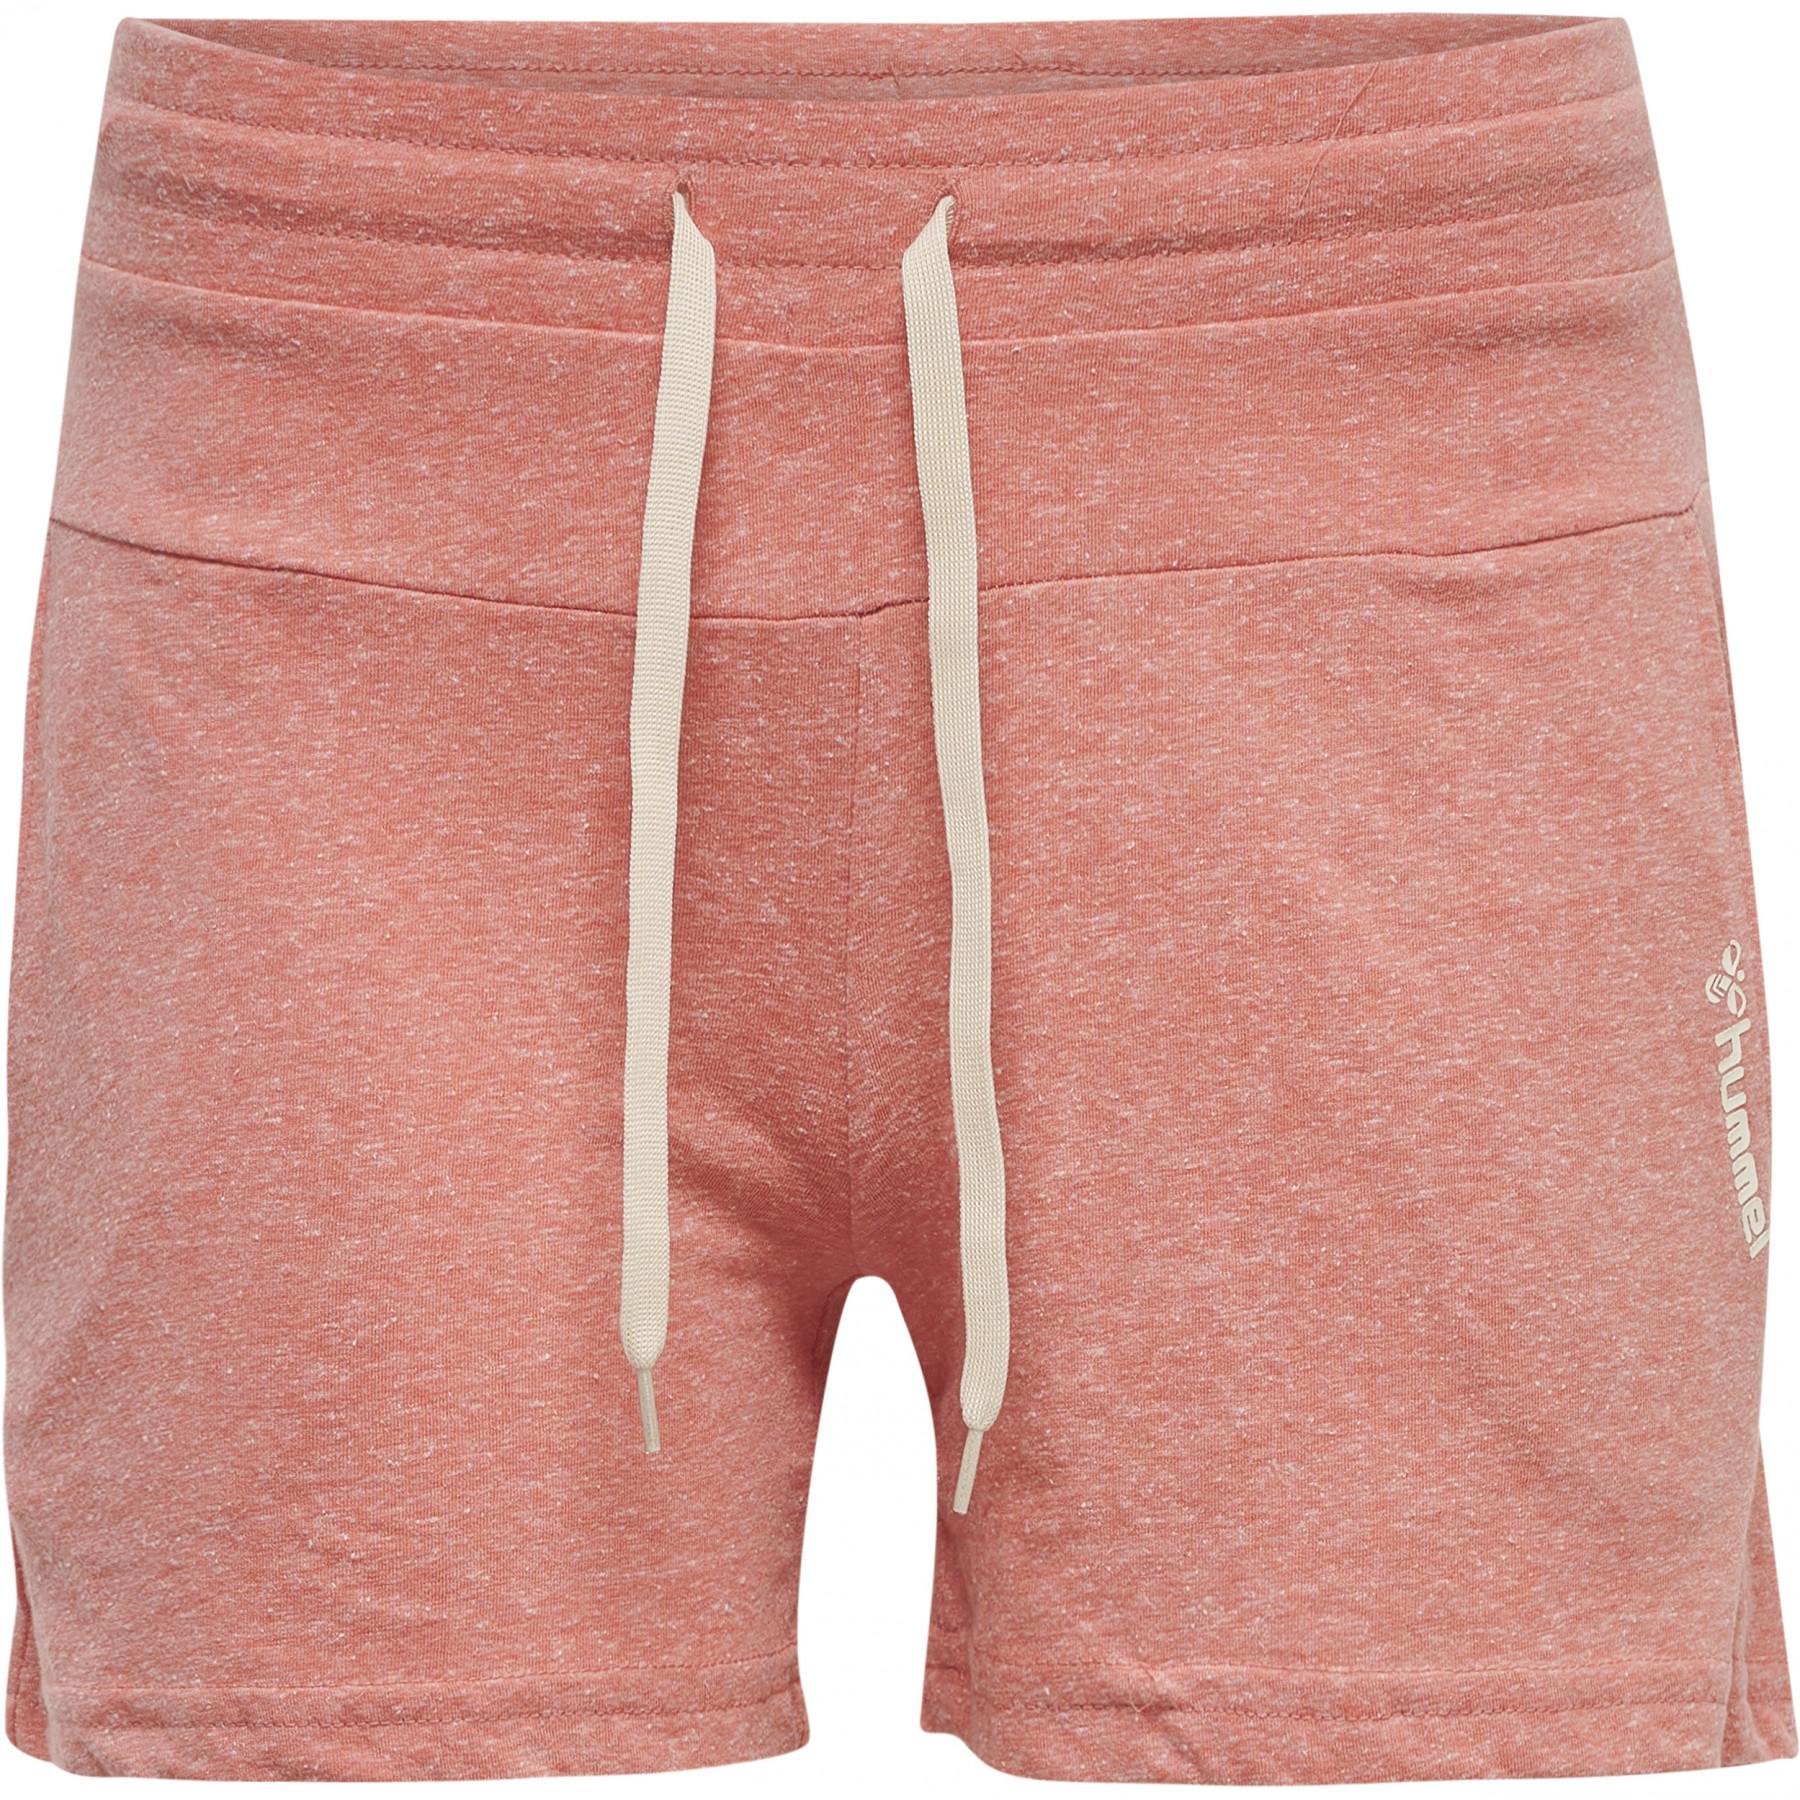 Pantalones cortos de mujer Hummel hmlzandra